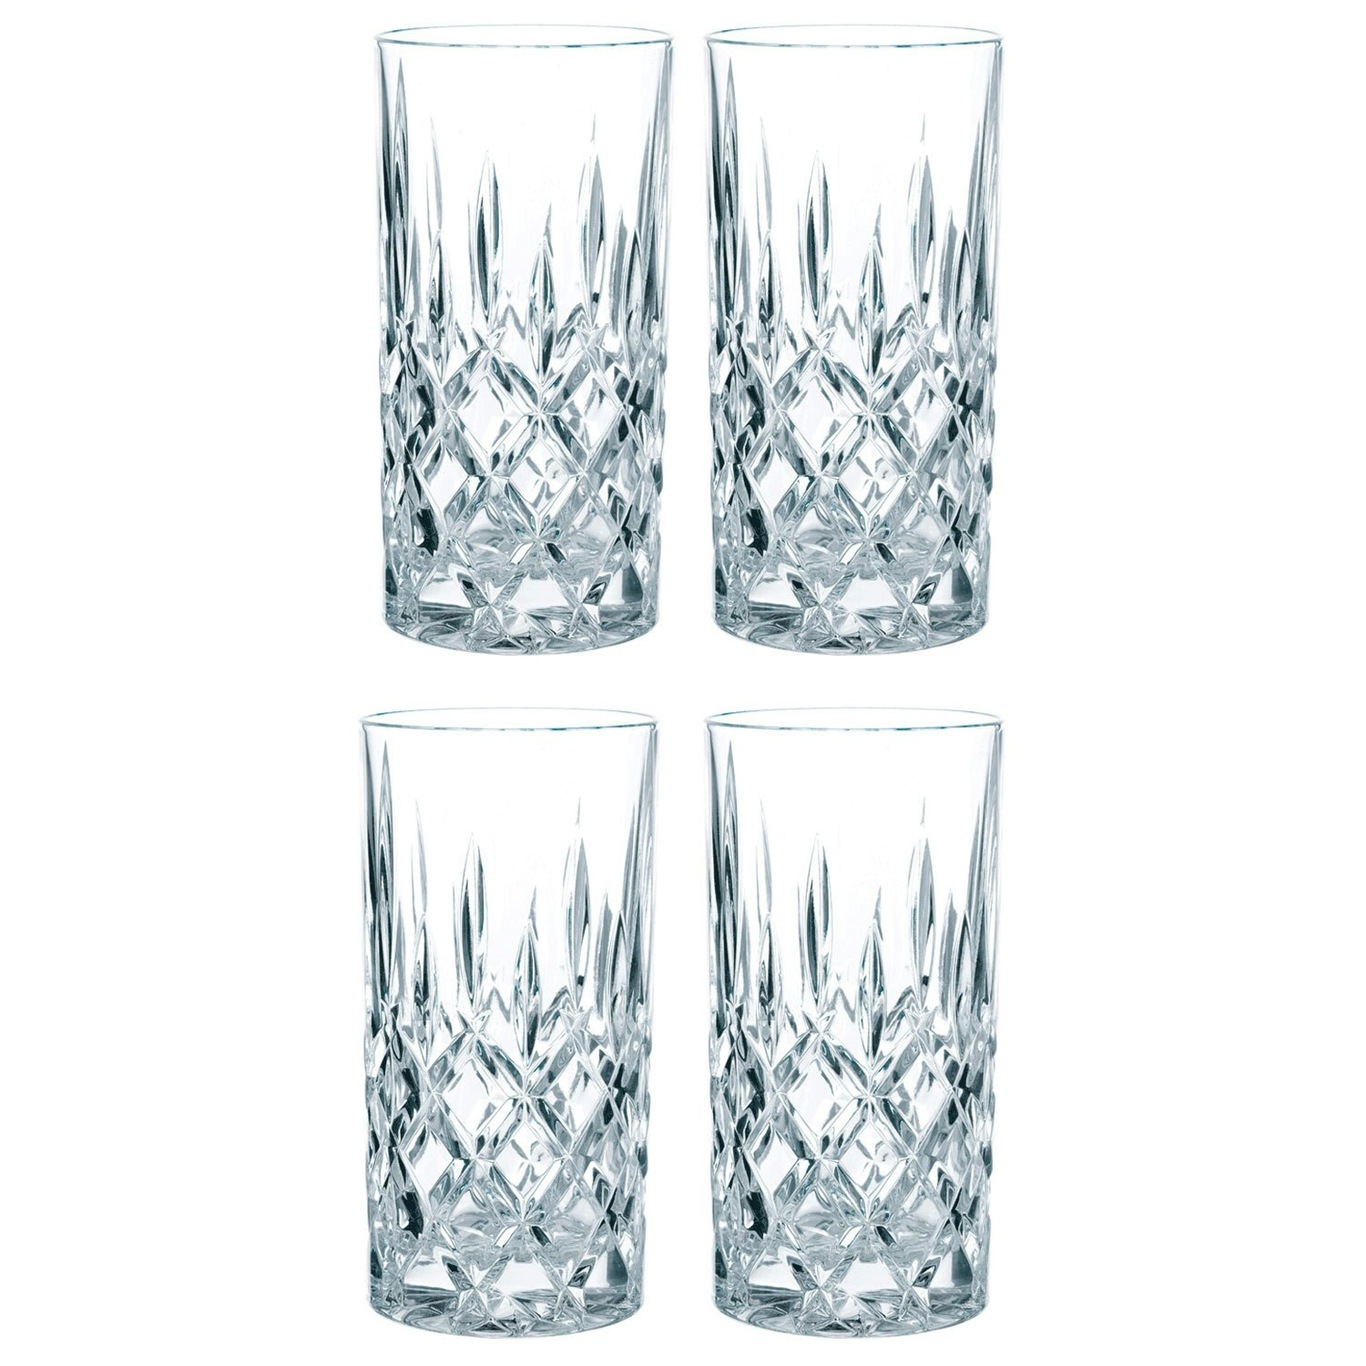 Noblesse Wine Glass 4-pack, 35 cl - Nachtmann @ RoyalDesign